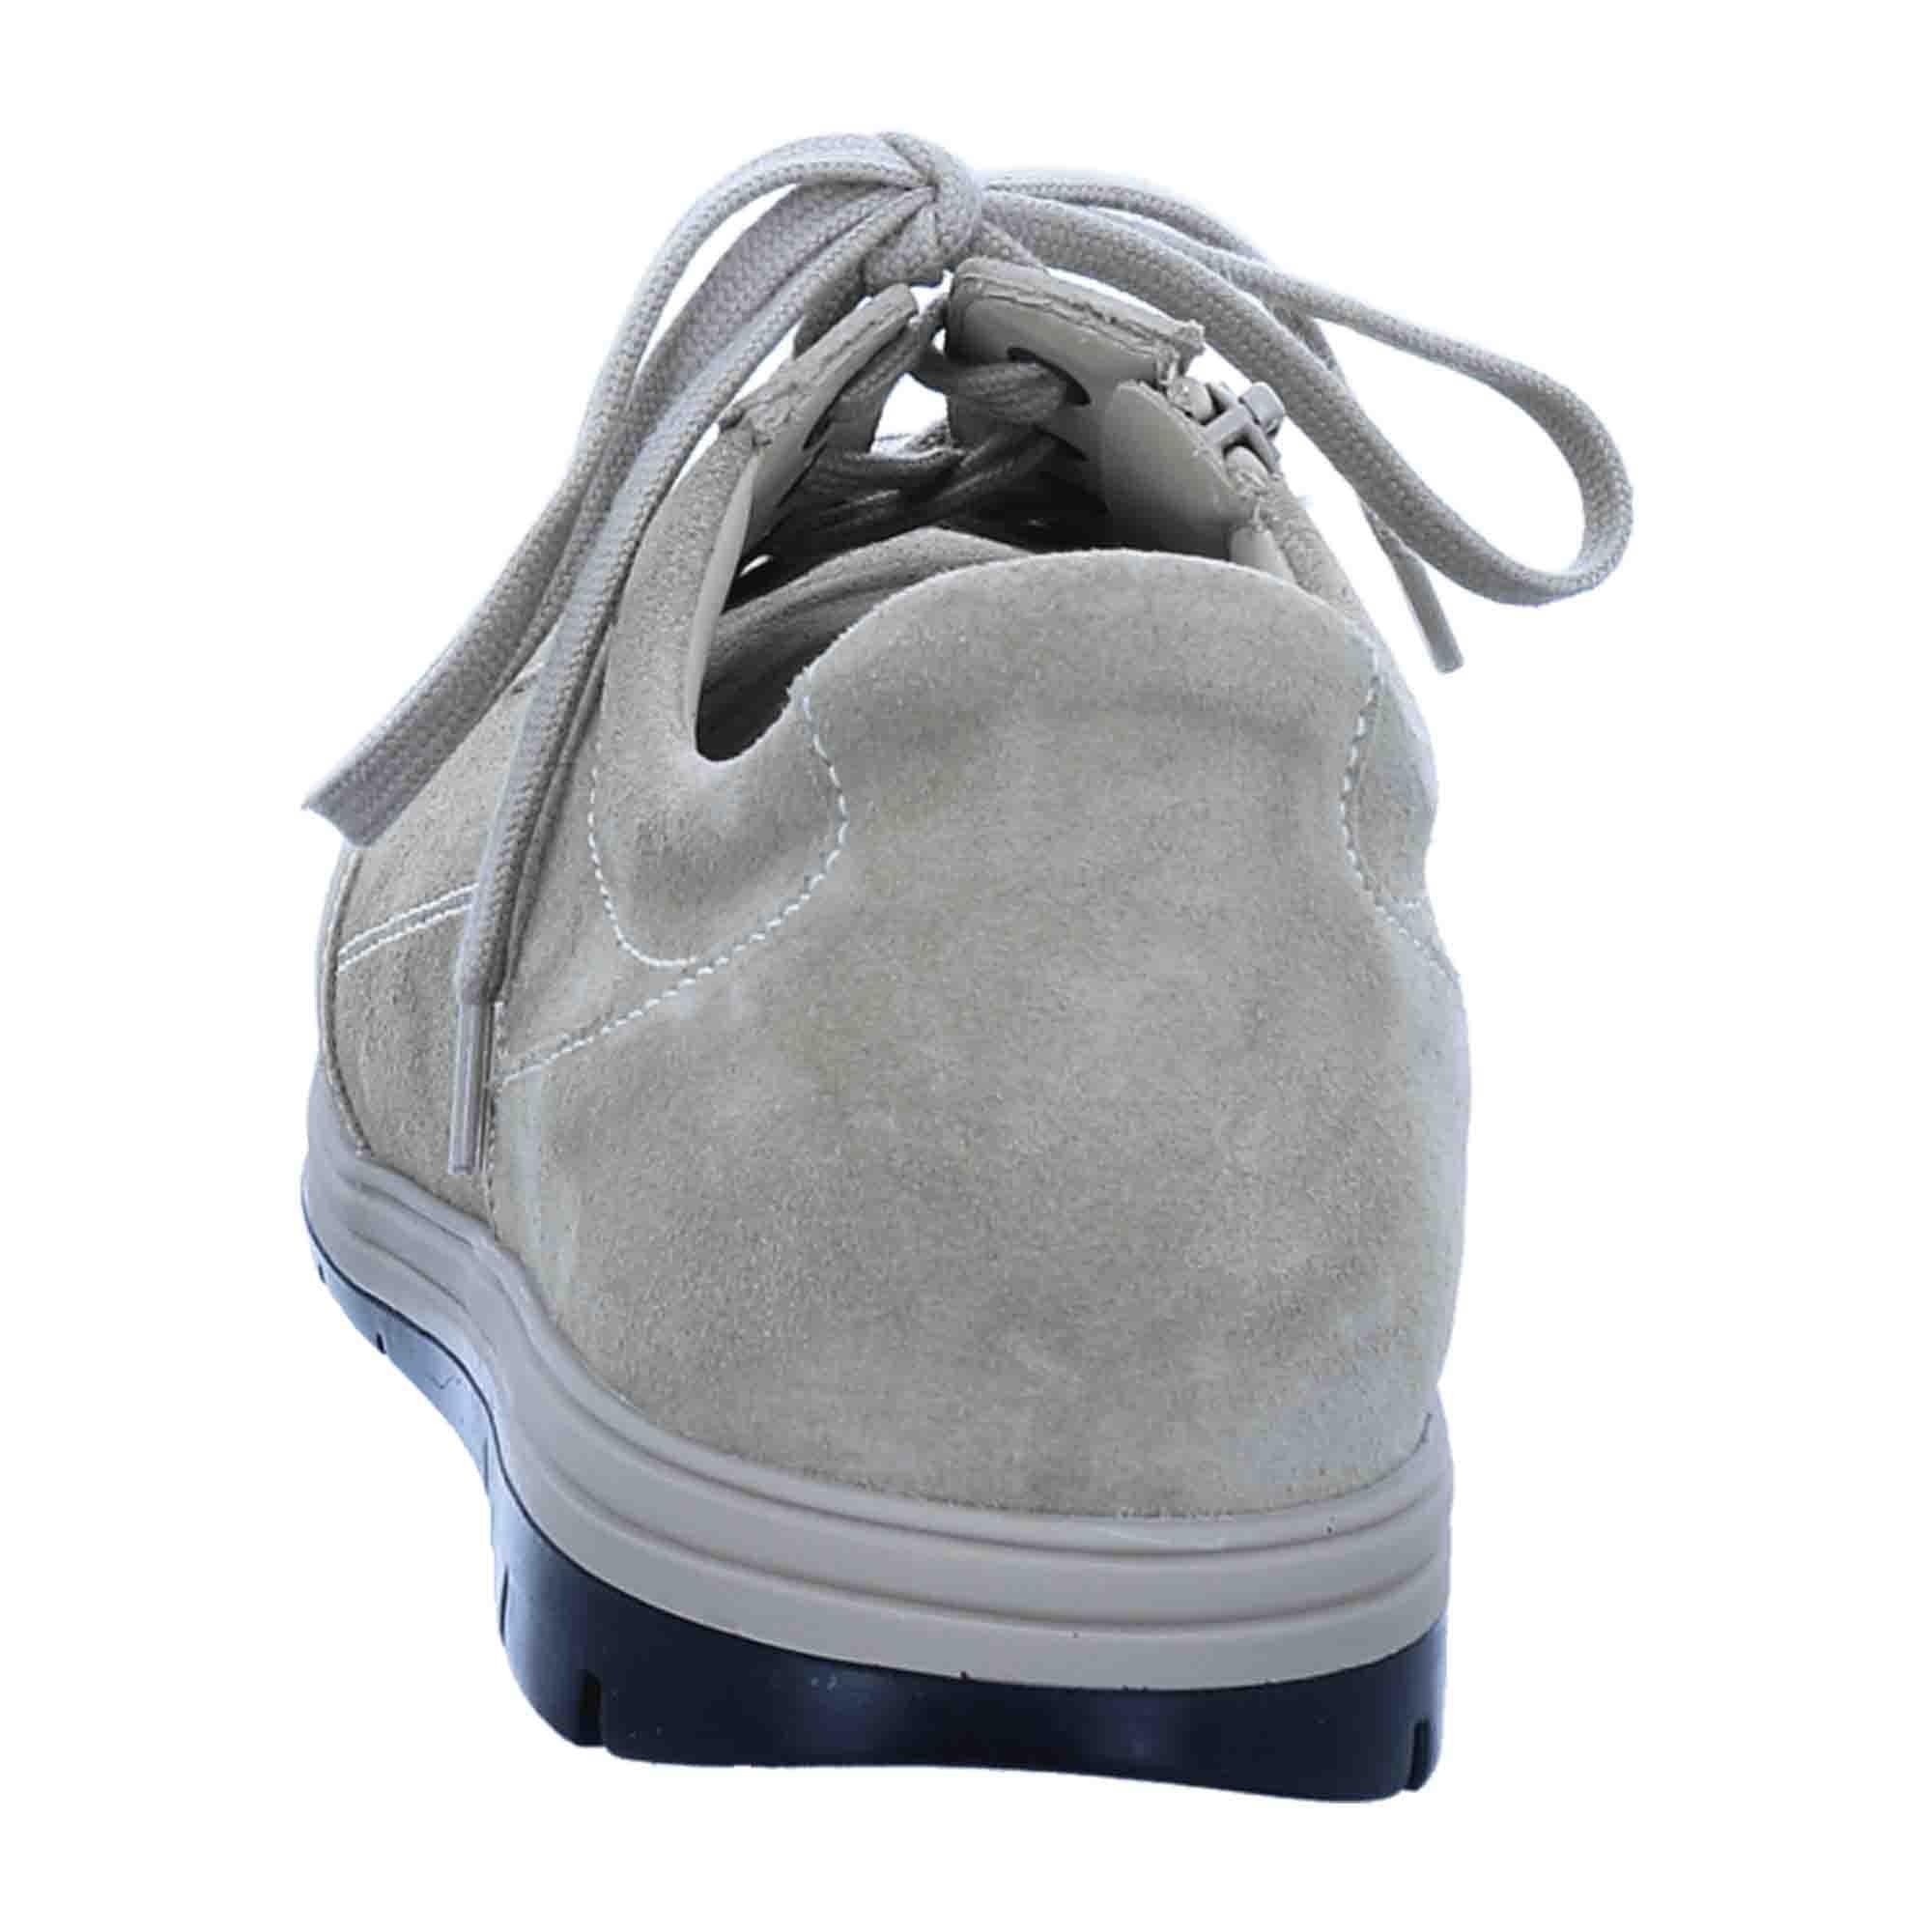 Finn Comfort Osorno Men's Comfort Shoes in Beige - Stylish & Durable